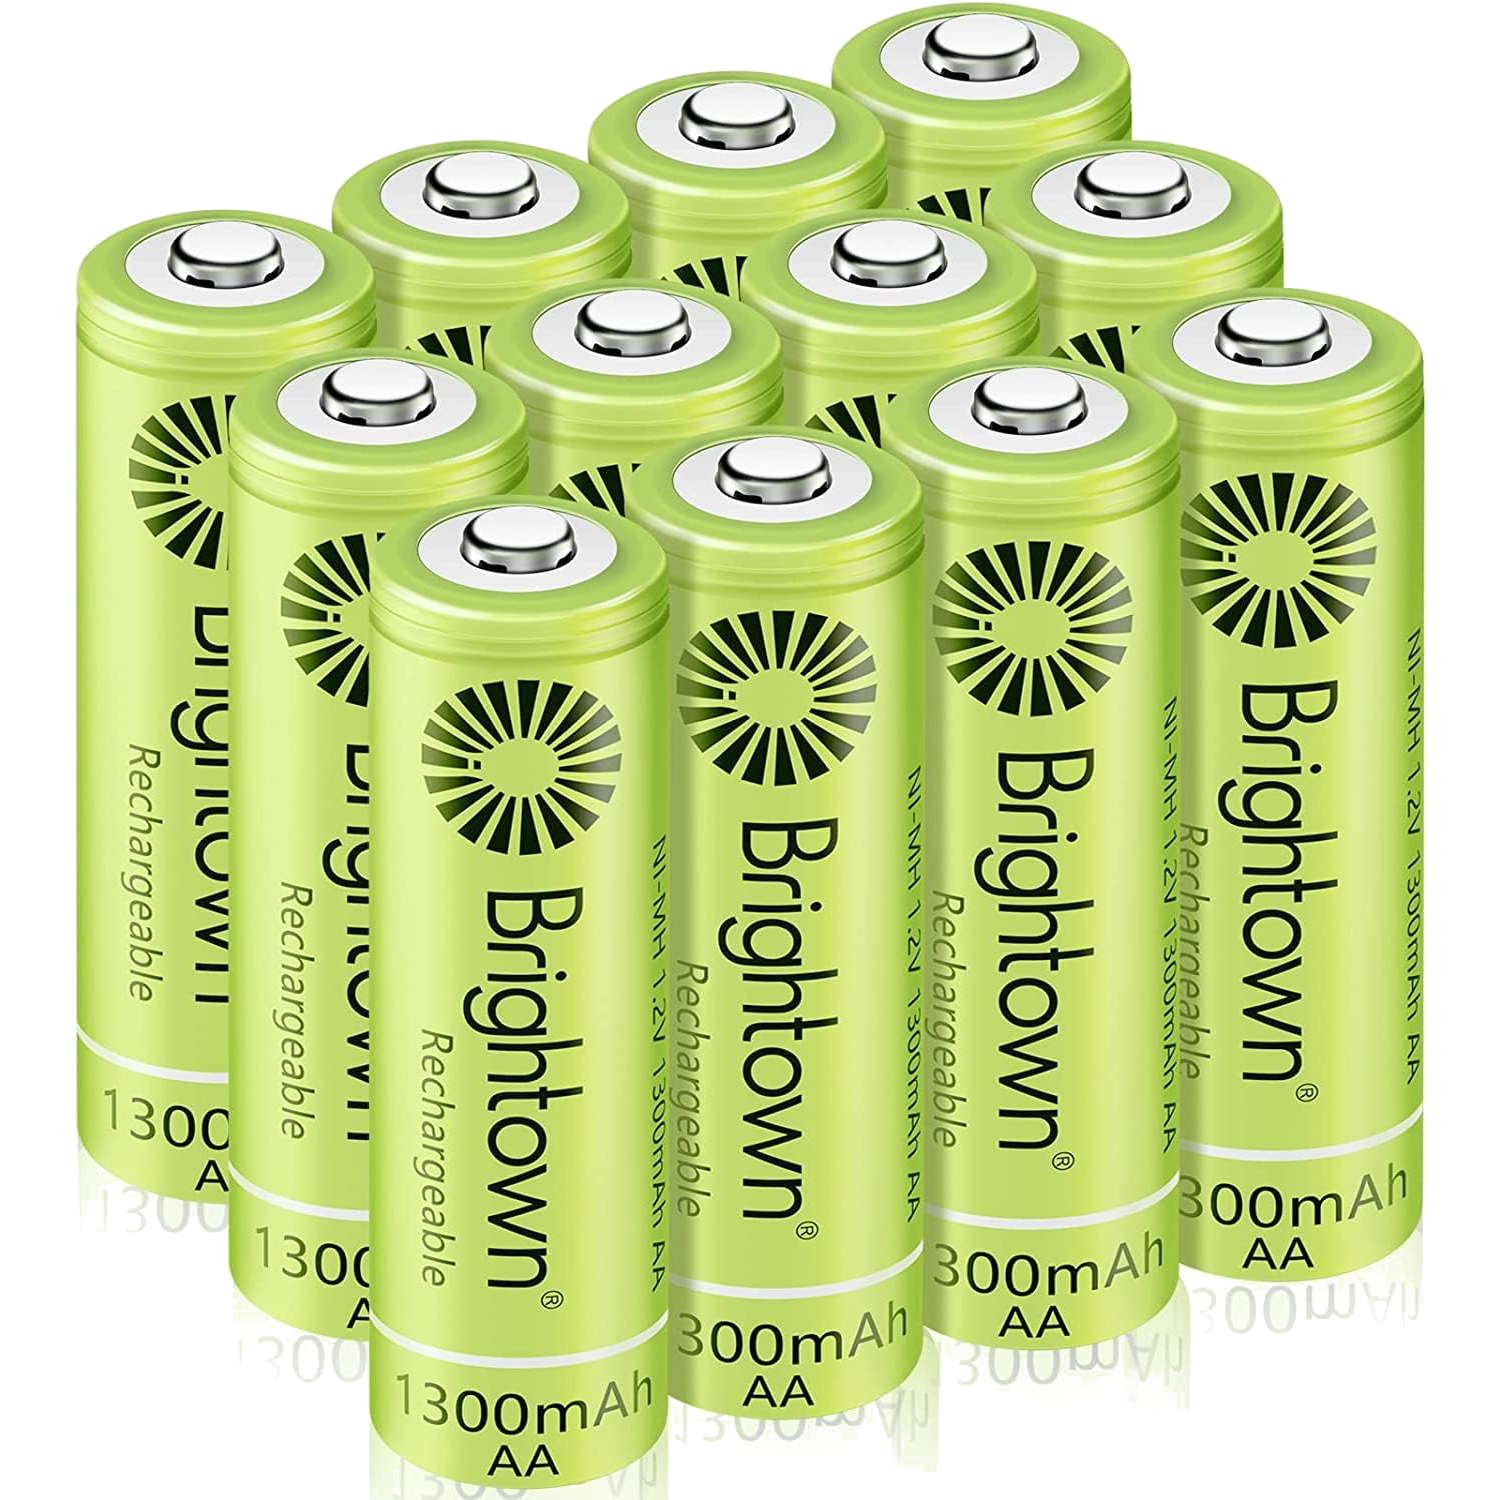 brightown-aa-rechargeable-batteries-solar-render-01